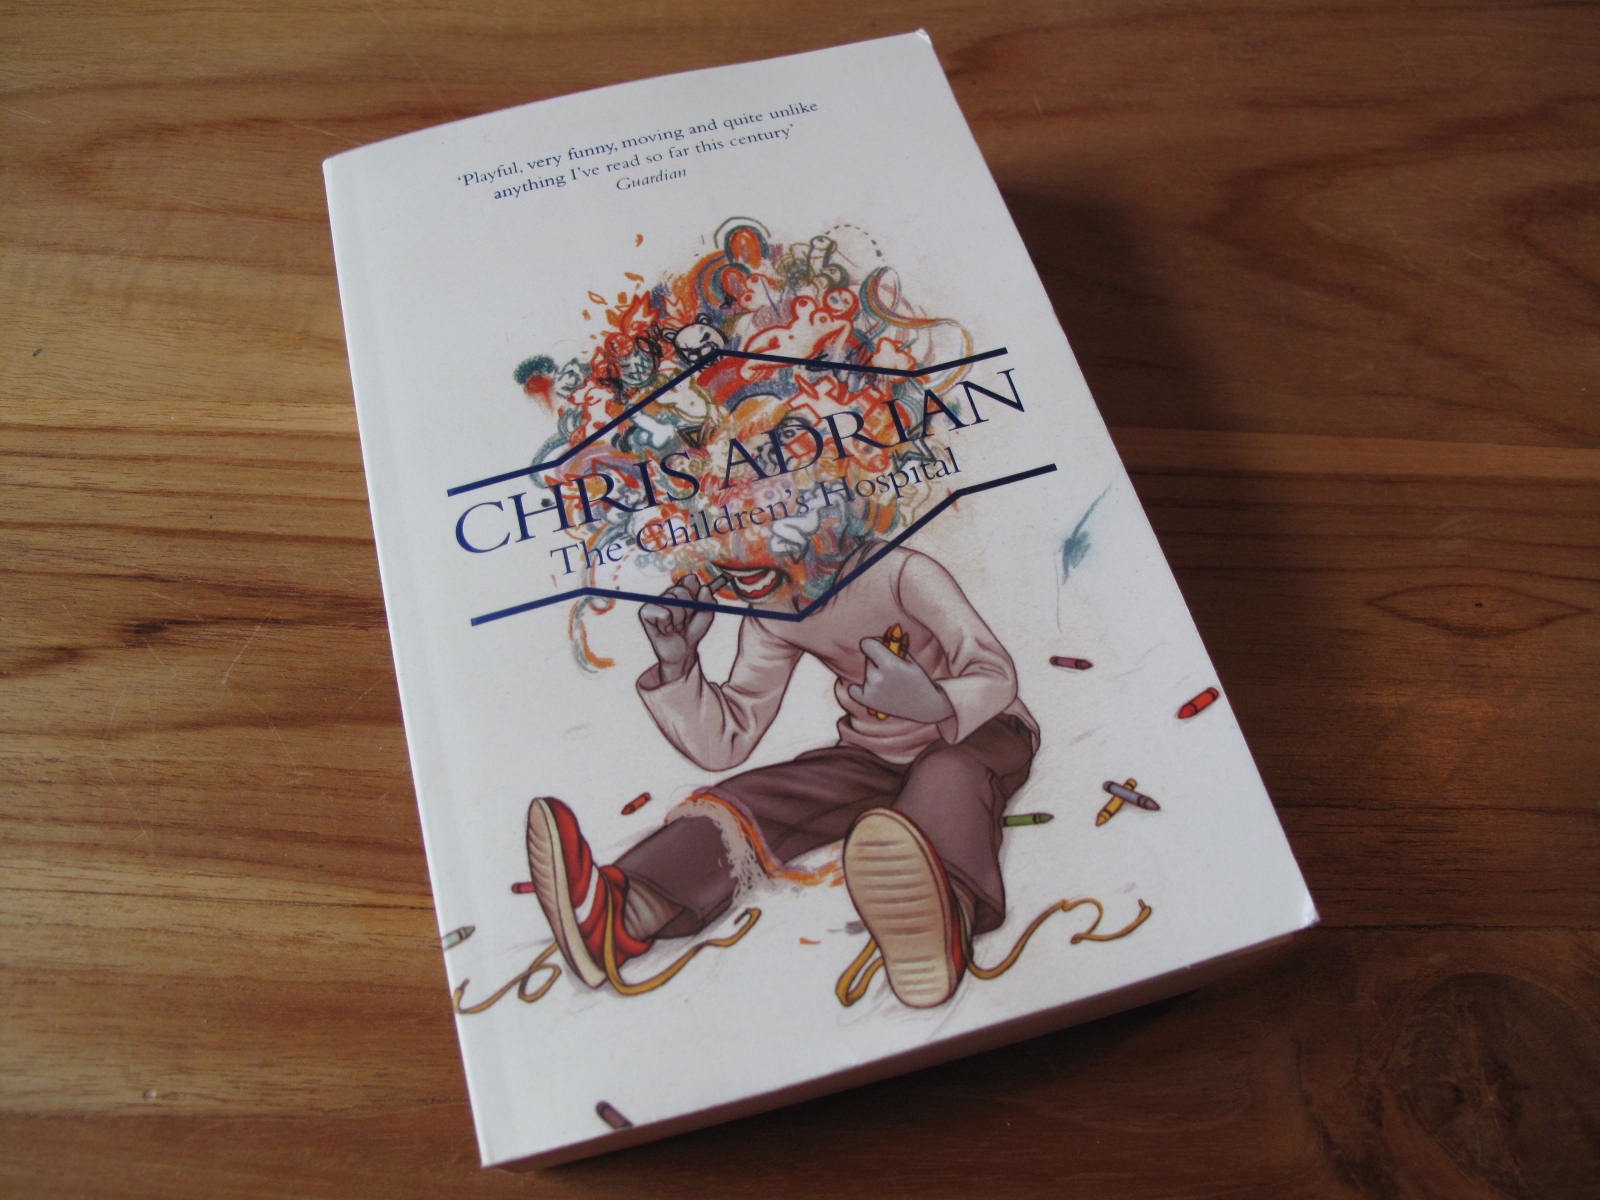 Book: The Children’s Hospital, Chris Adrian